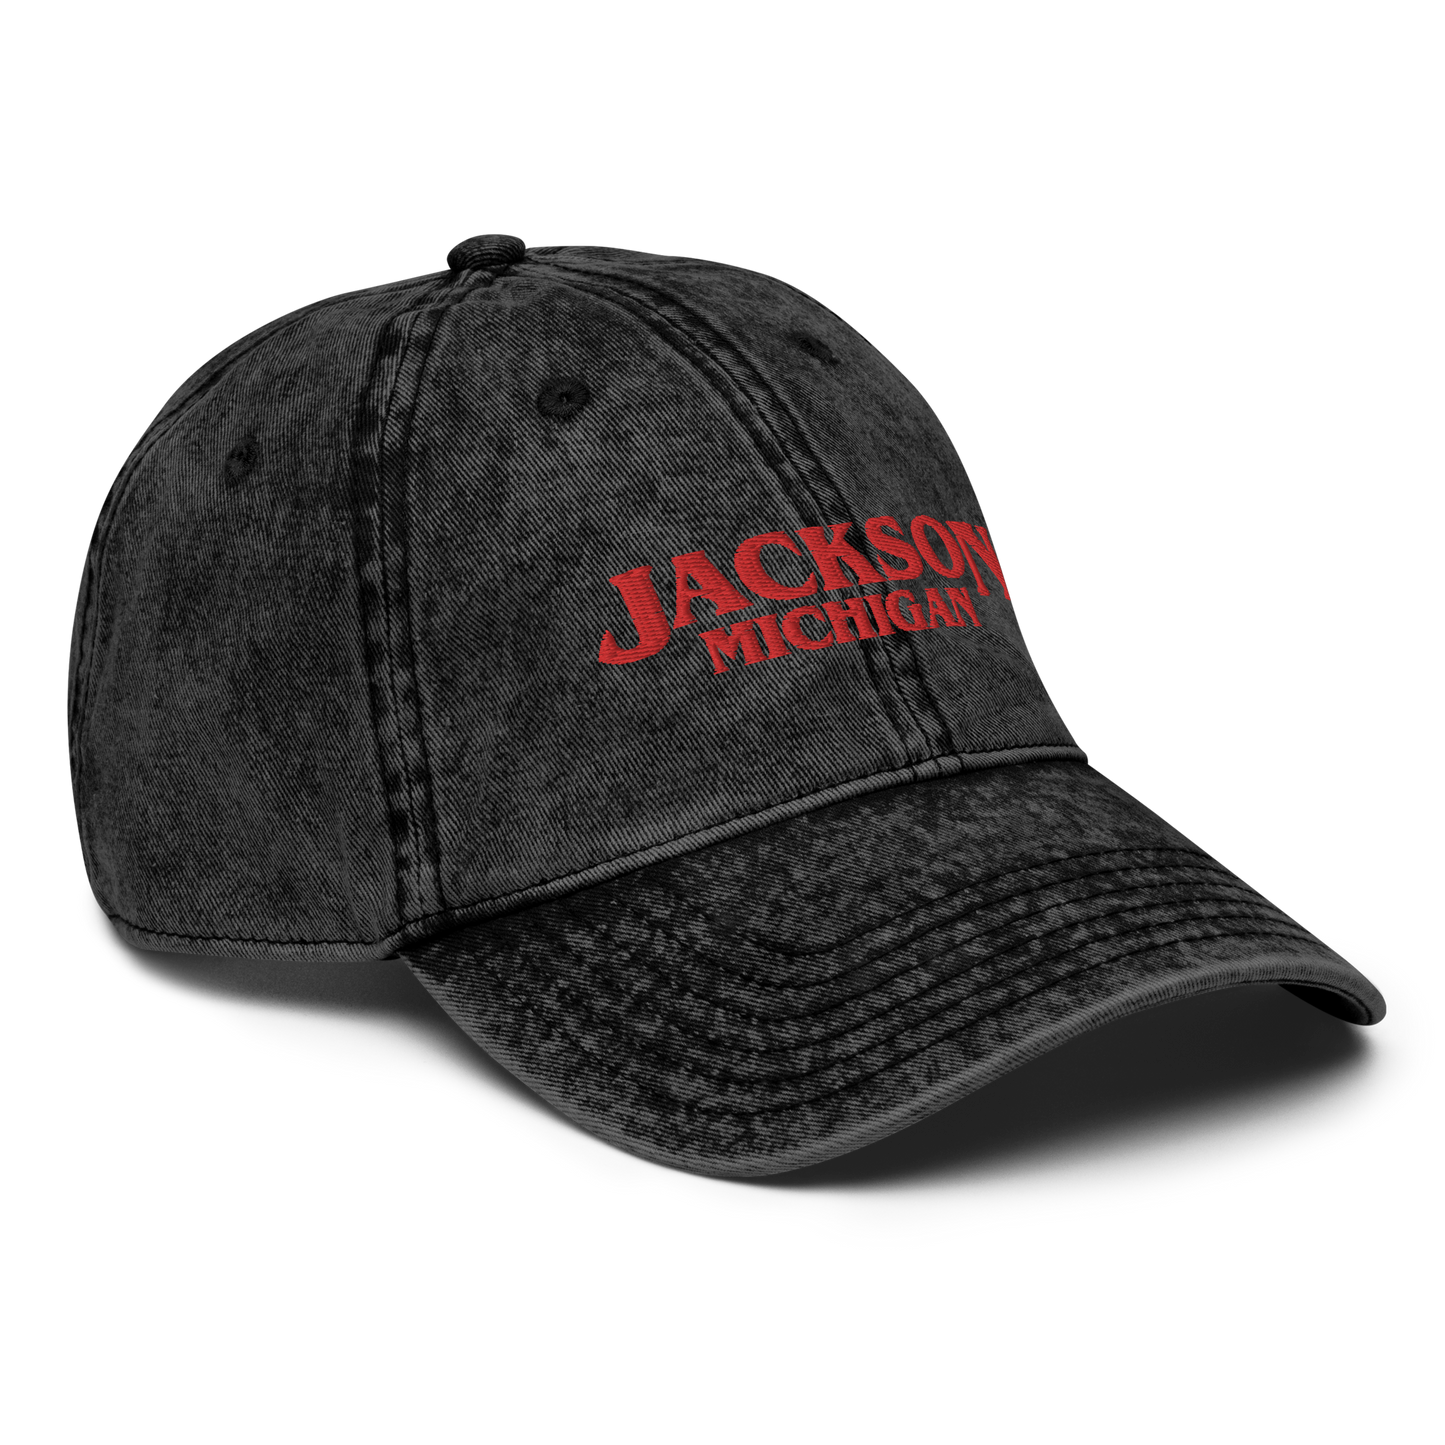 'Jackson Michigan' Vintage Baseball Cap (1980s Drama Parody)